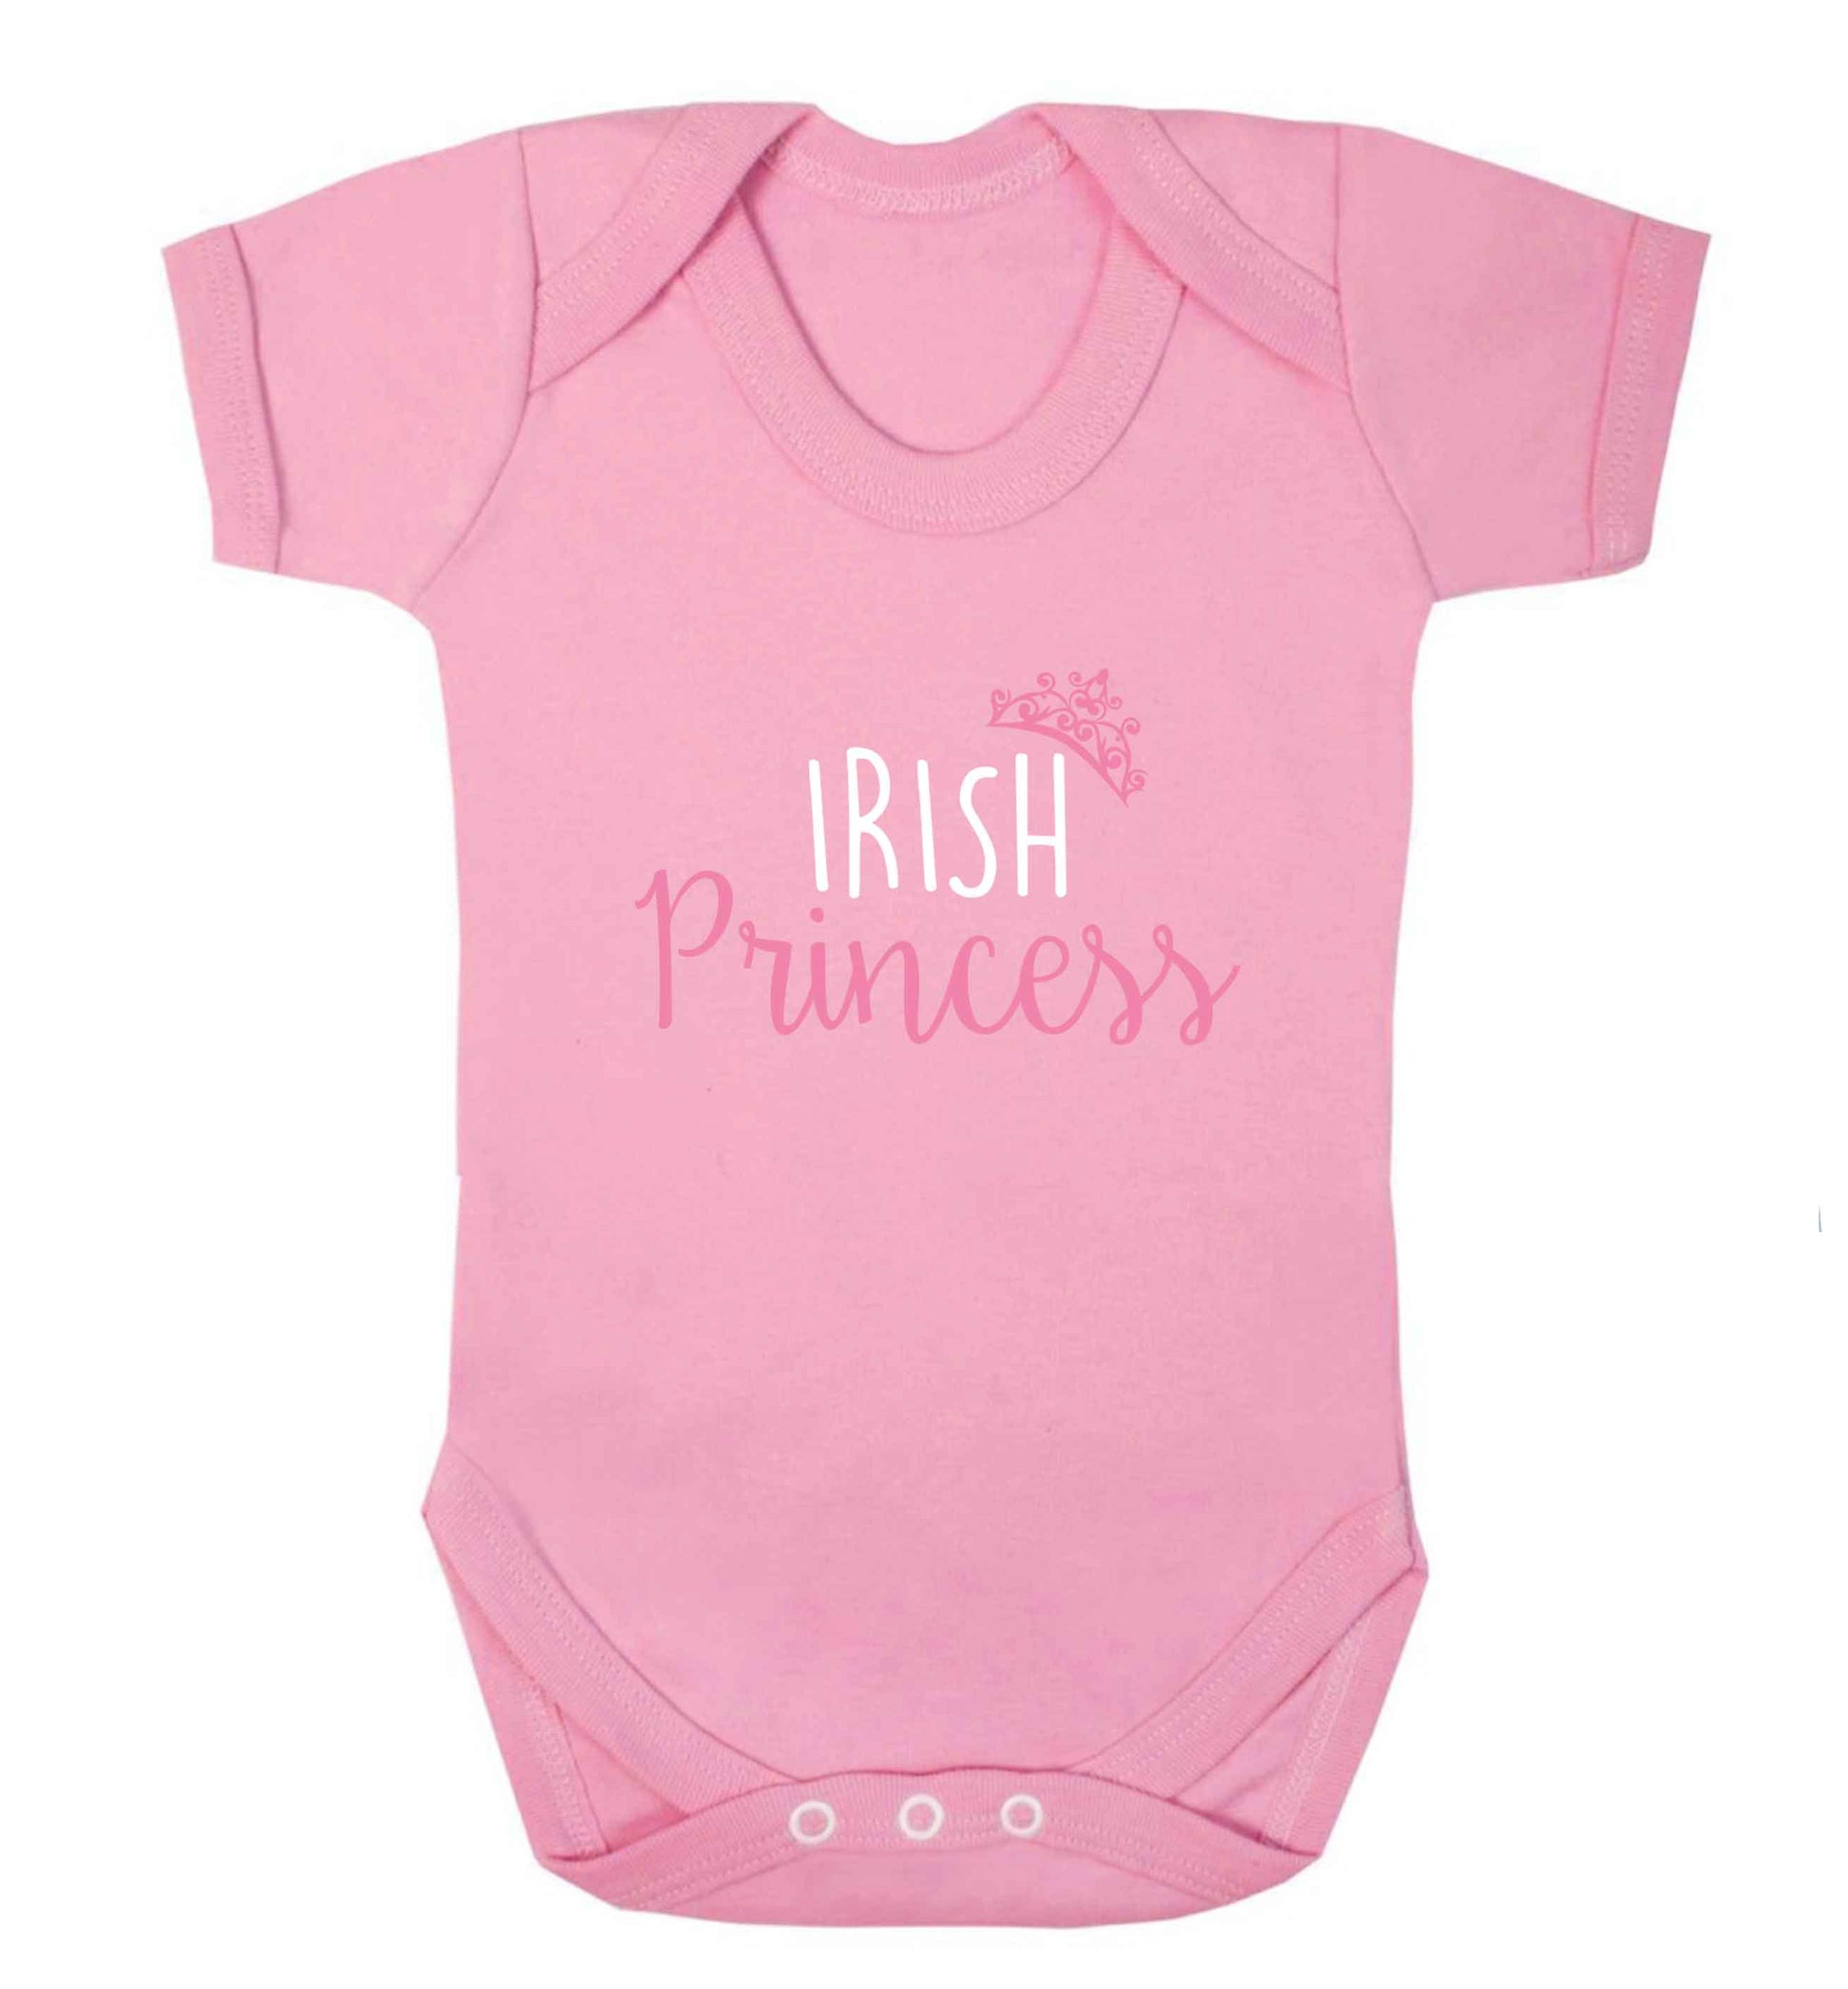 Irish princess baby vest pale pink 18-24 months